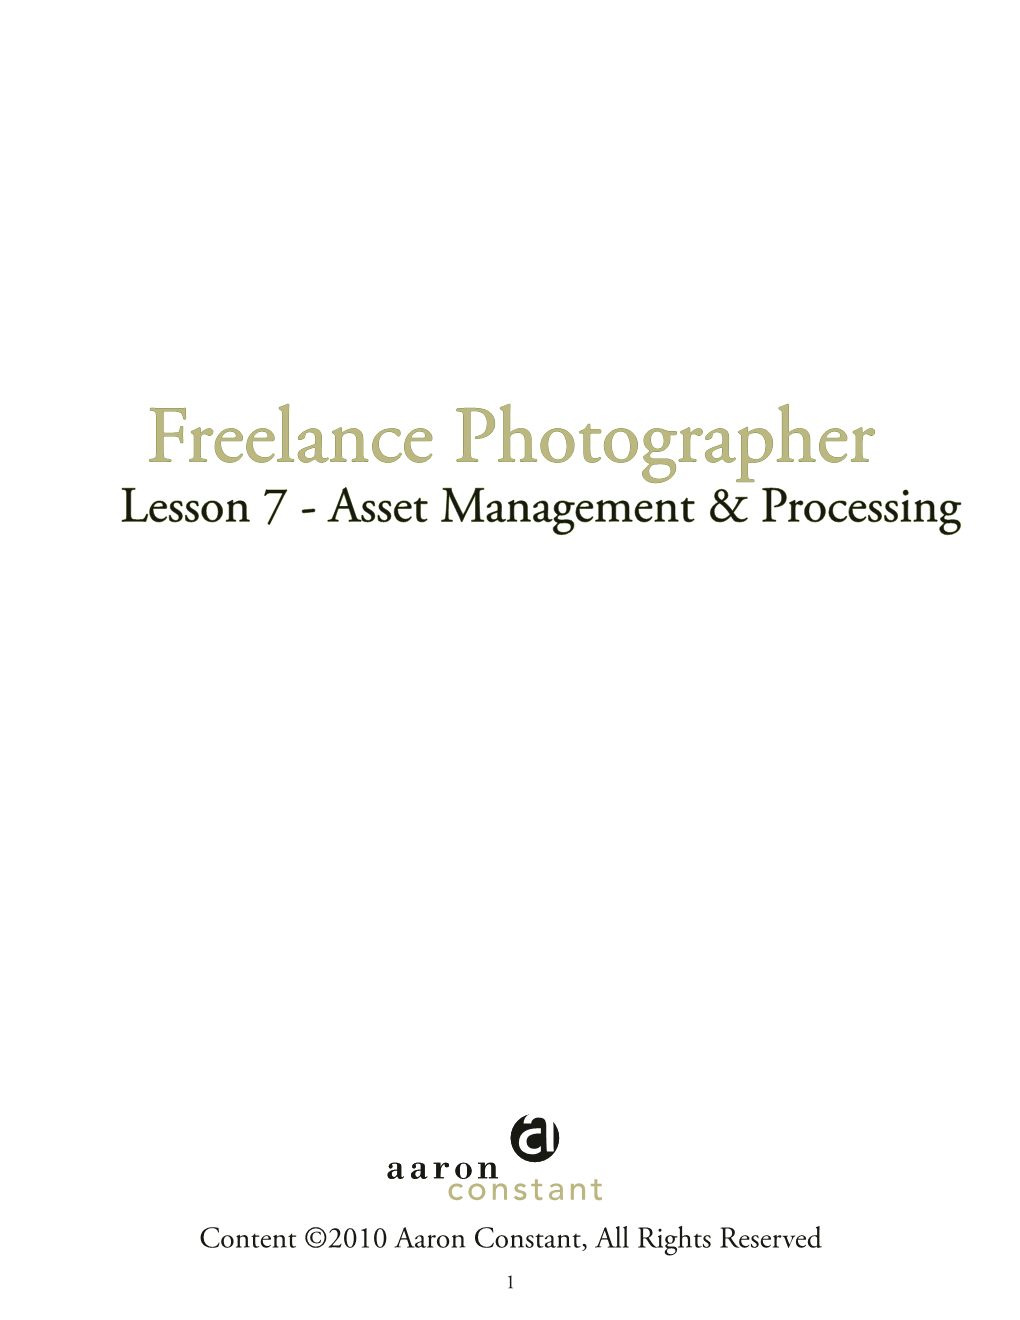 Freelance Photographer Lesson 7 - Asset Management & Processing